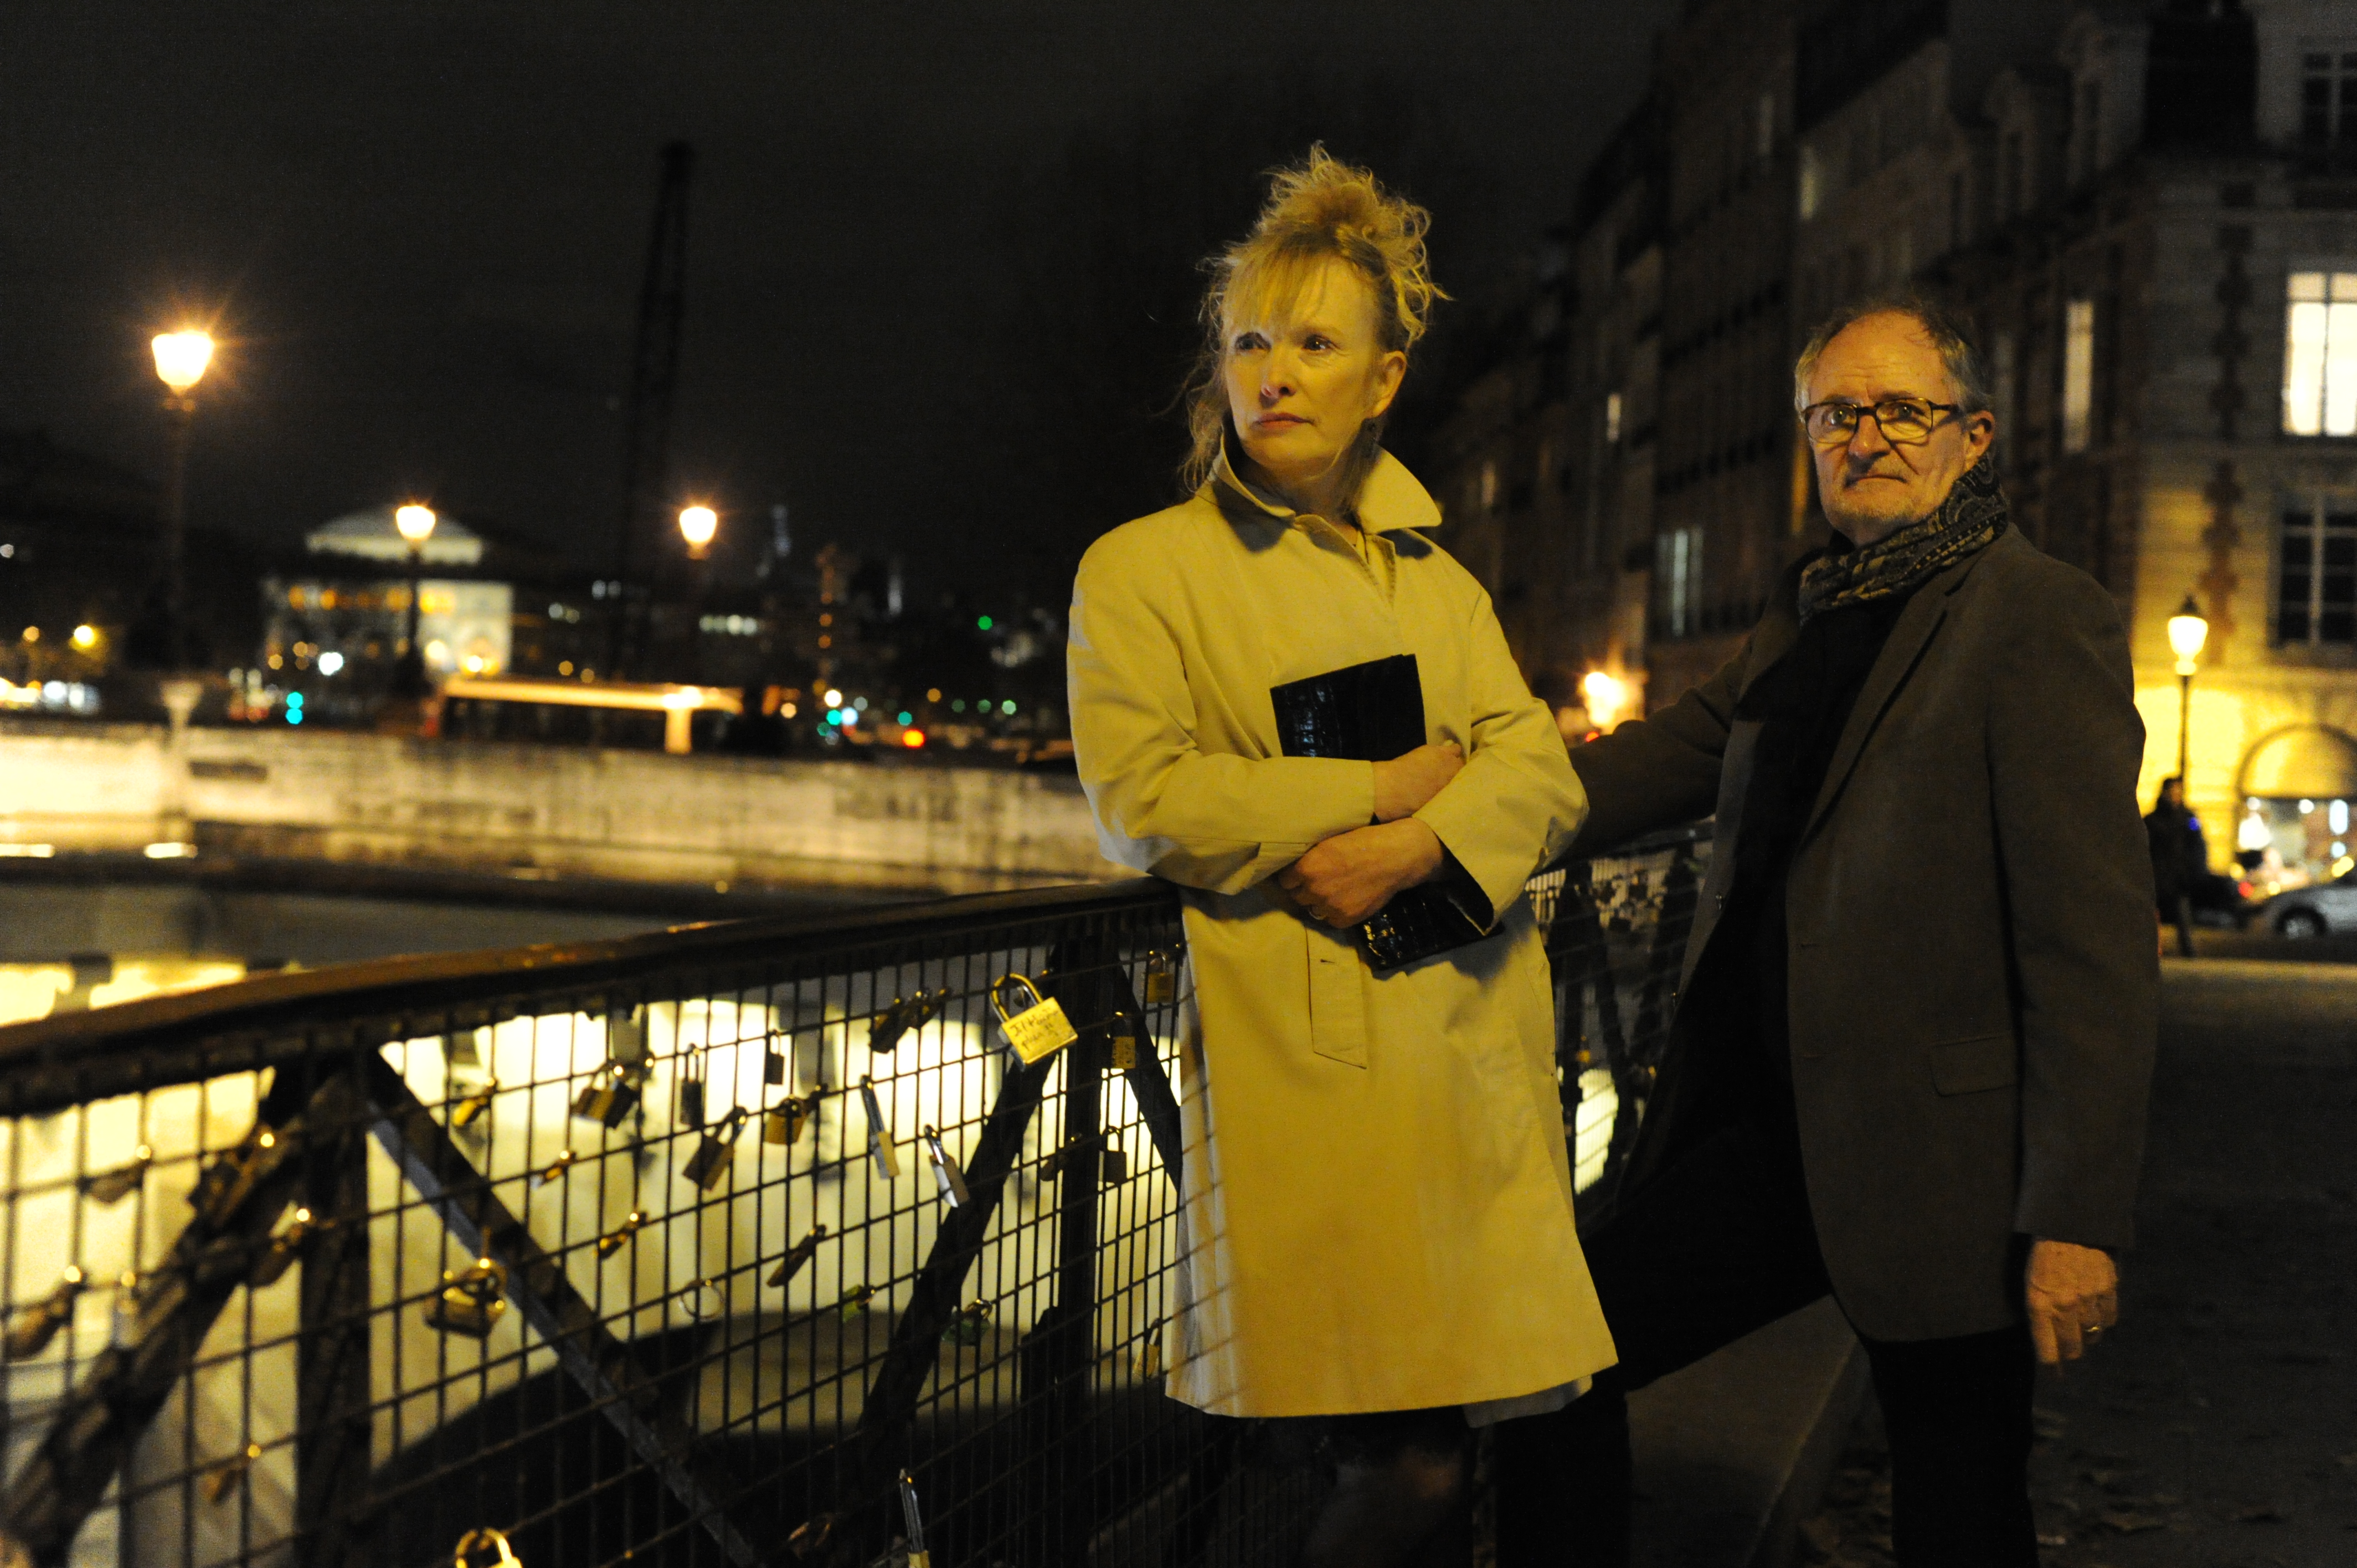 Still of Jim Broadbent and Lindsay Duncan in Savaitgalis Paryziuje (2013)